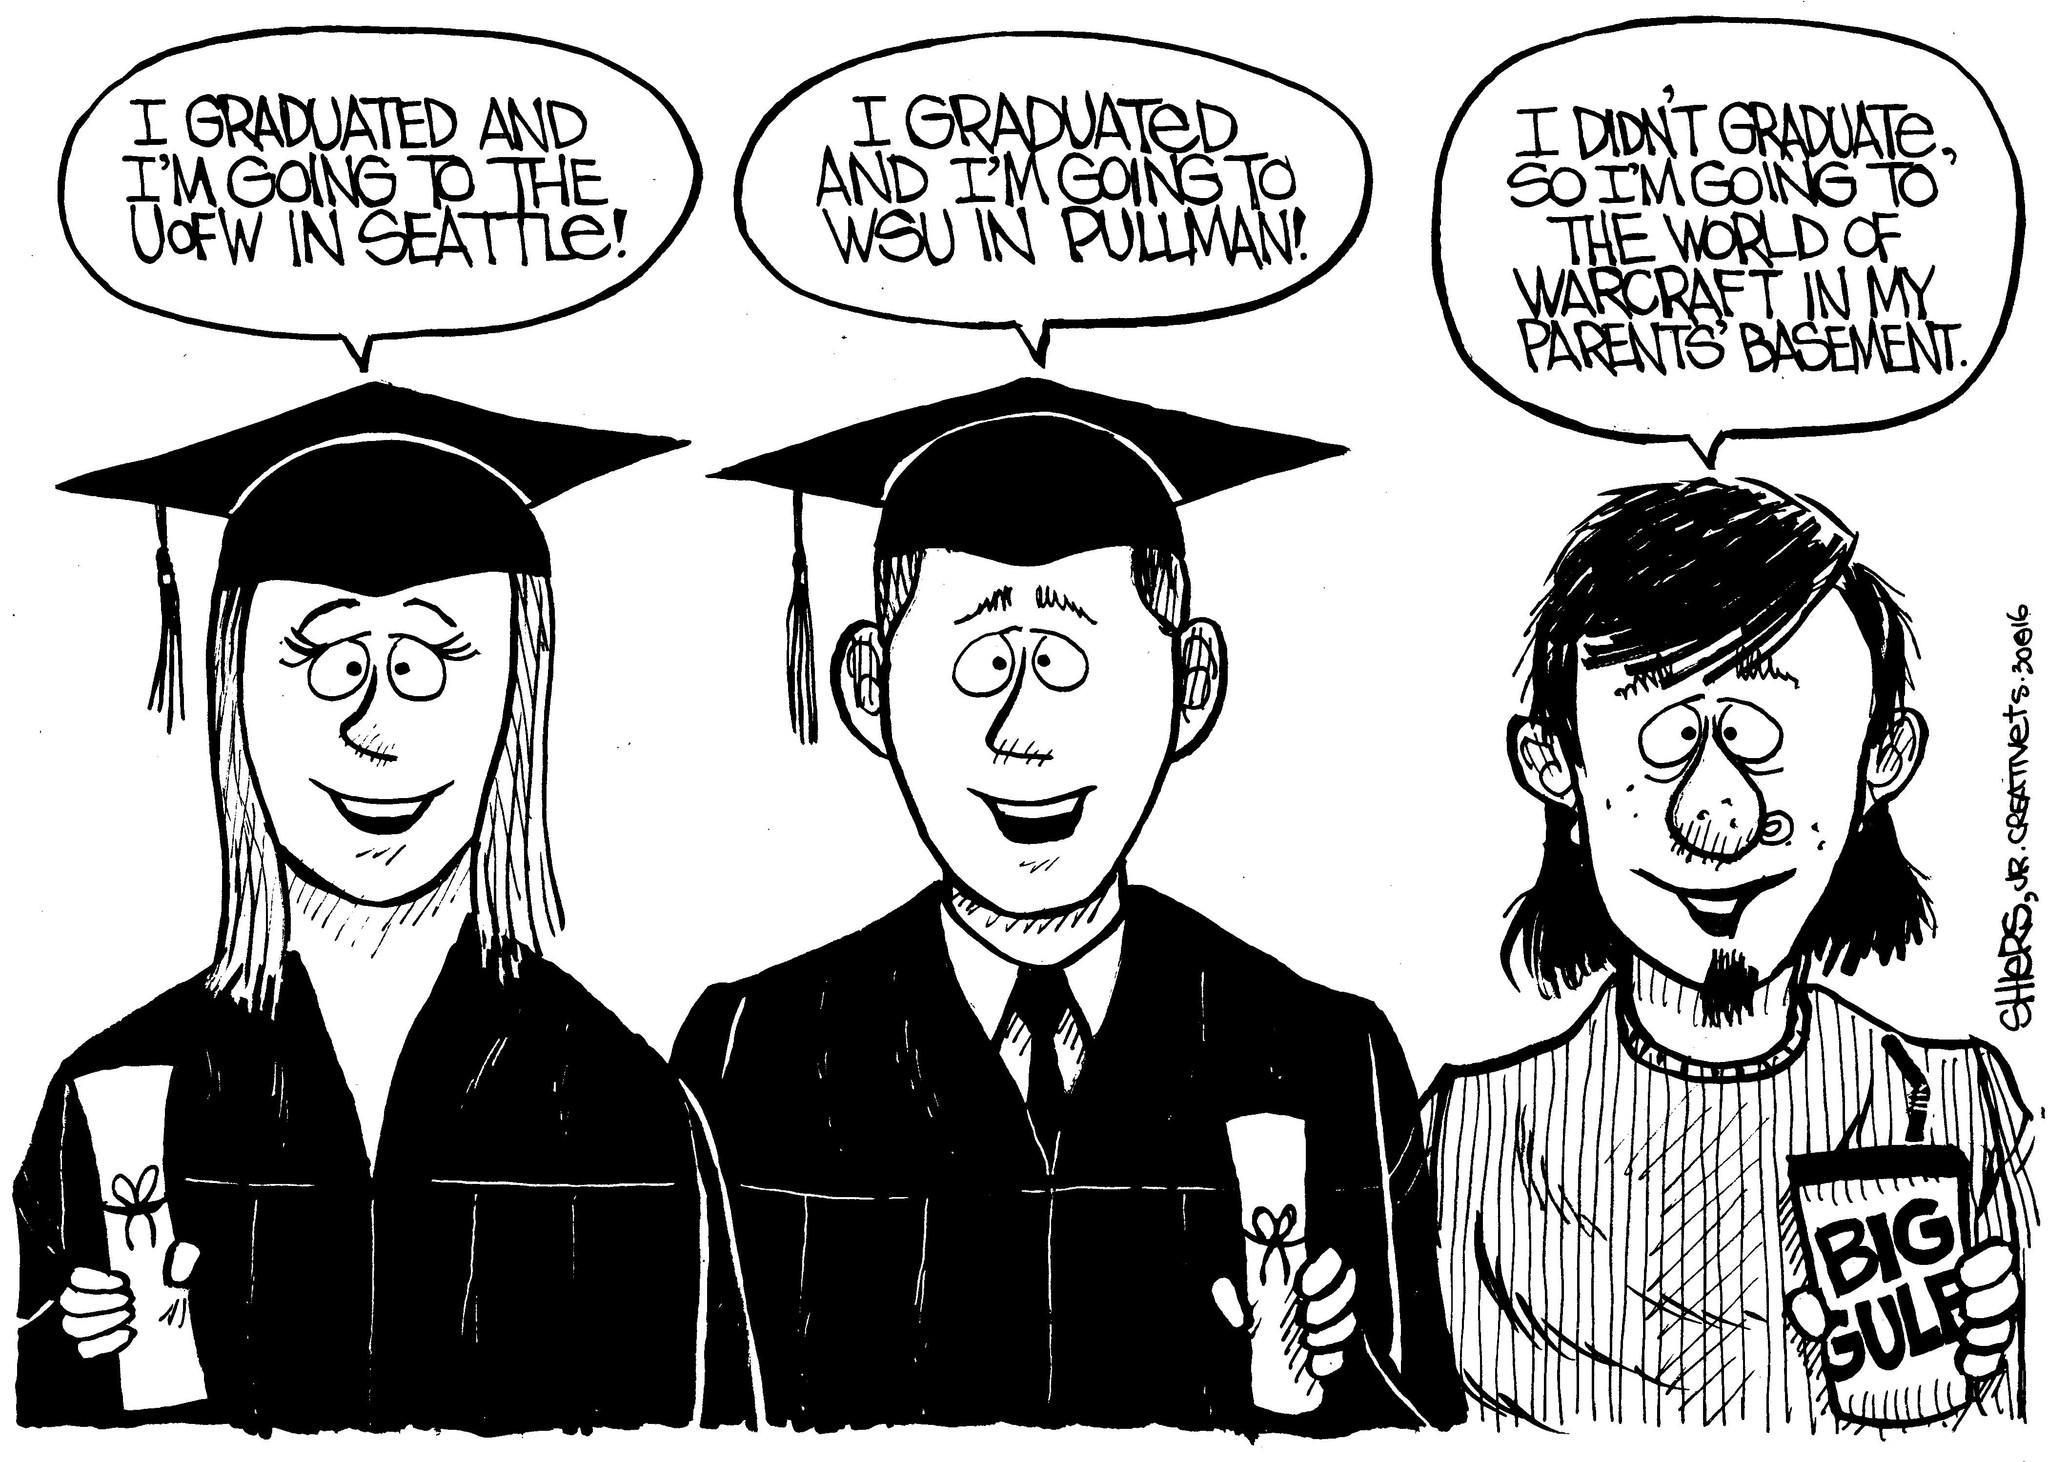 I graduated and I am going the University of Washington | Cartoon for May 31